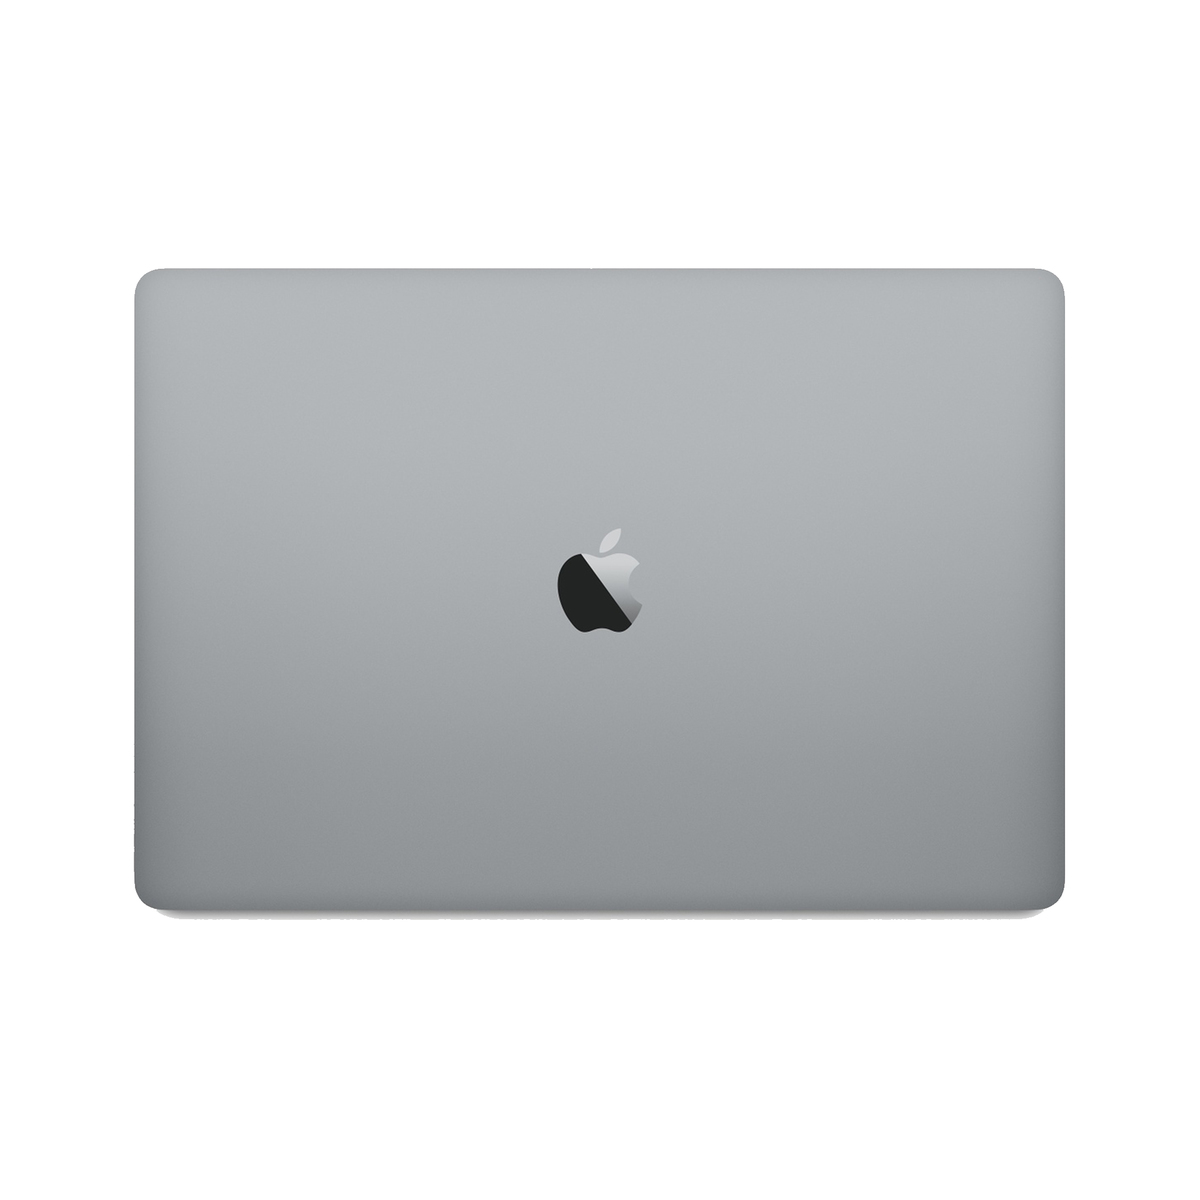 MacBook Pro Touch Bar With 15.4-Inch Retina Display, Core i7 Processor/16GB RAM/256GB SSD/4GB Radeon Pro 555X Graphics Card/Space Gray(MV902AB/A)